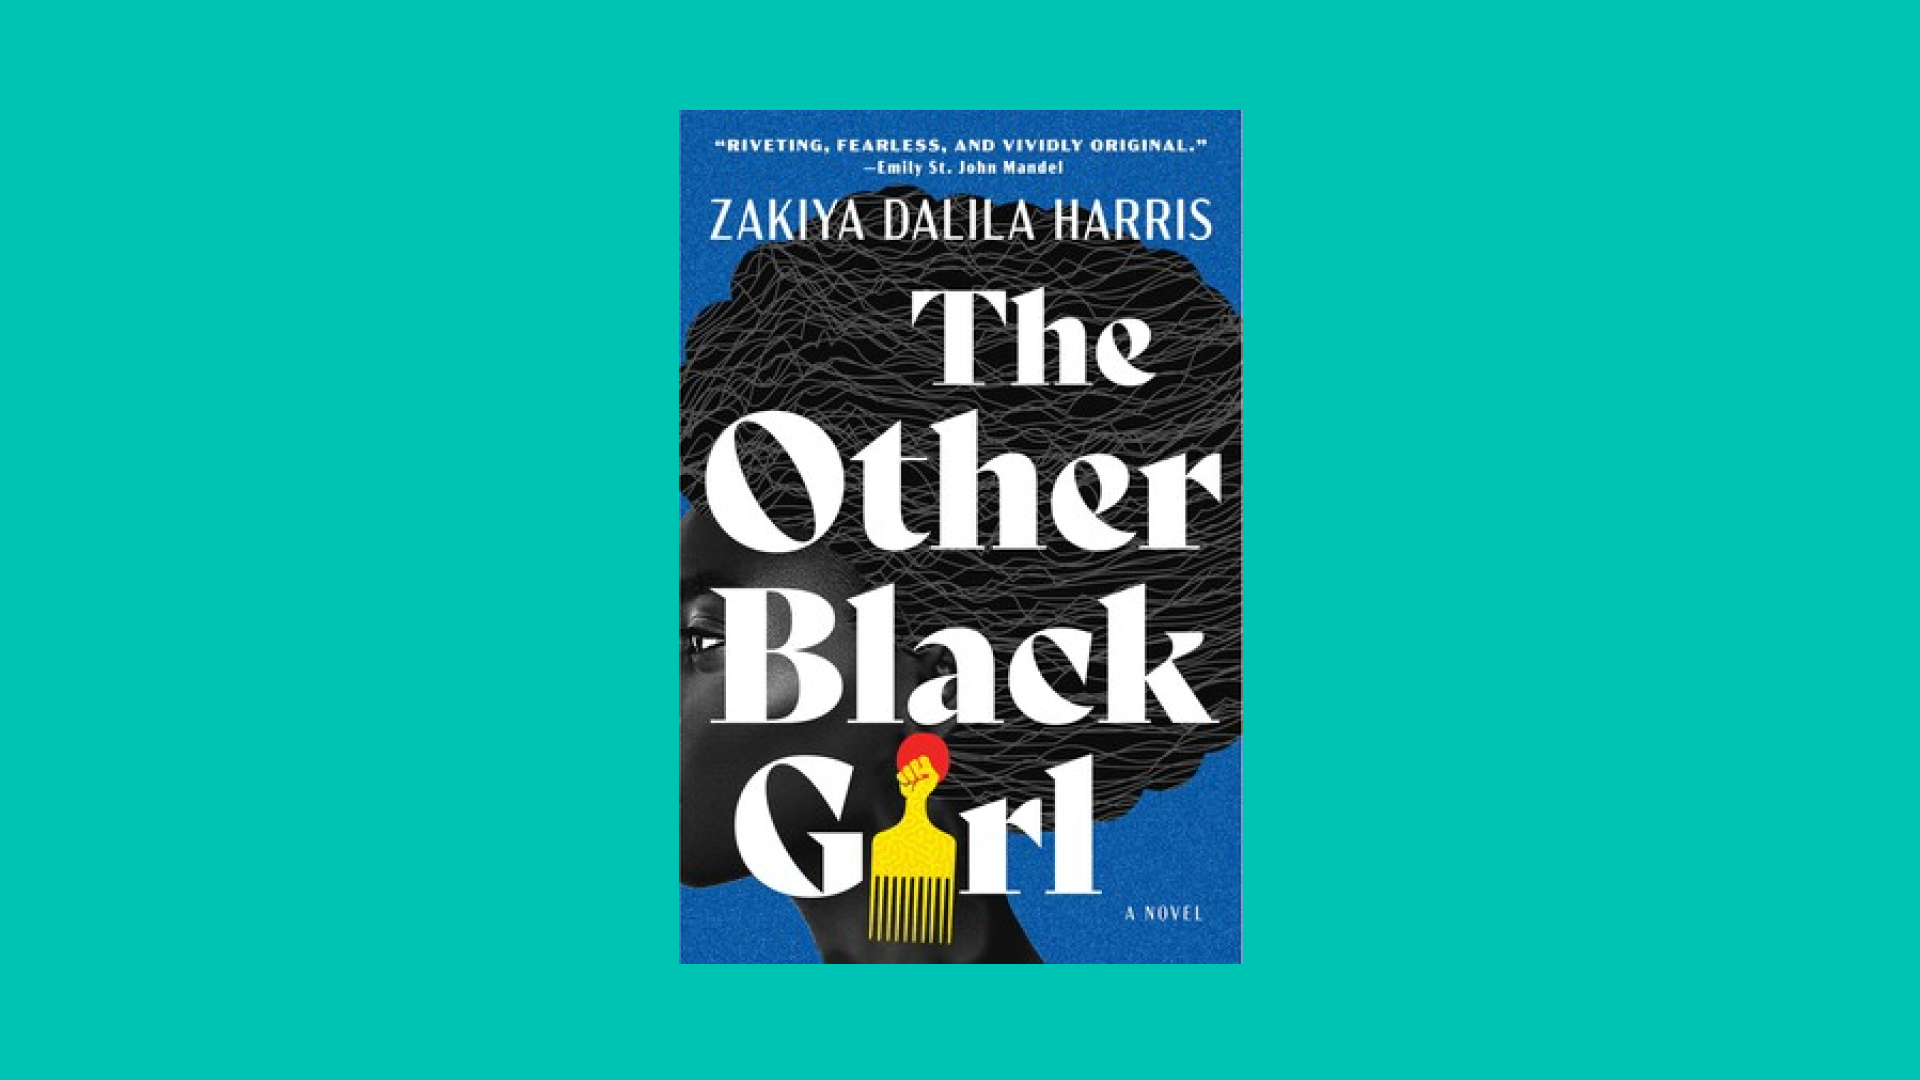 “The Other Black Girl” by Zakiya Dalila Harris